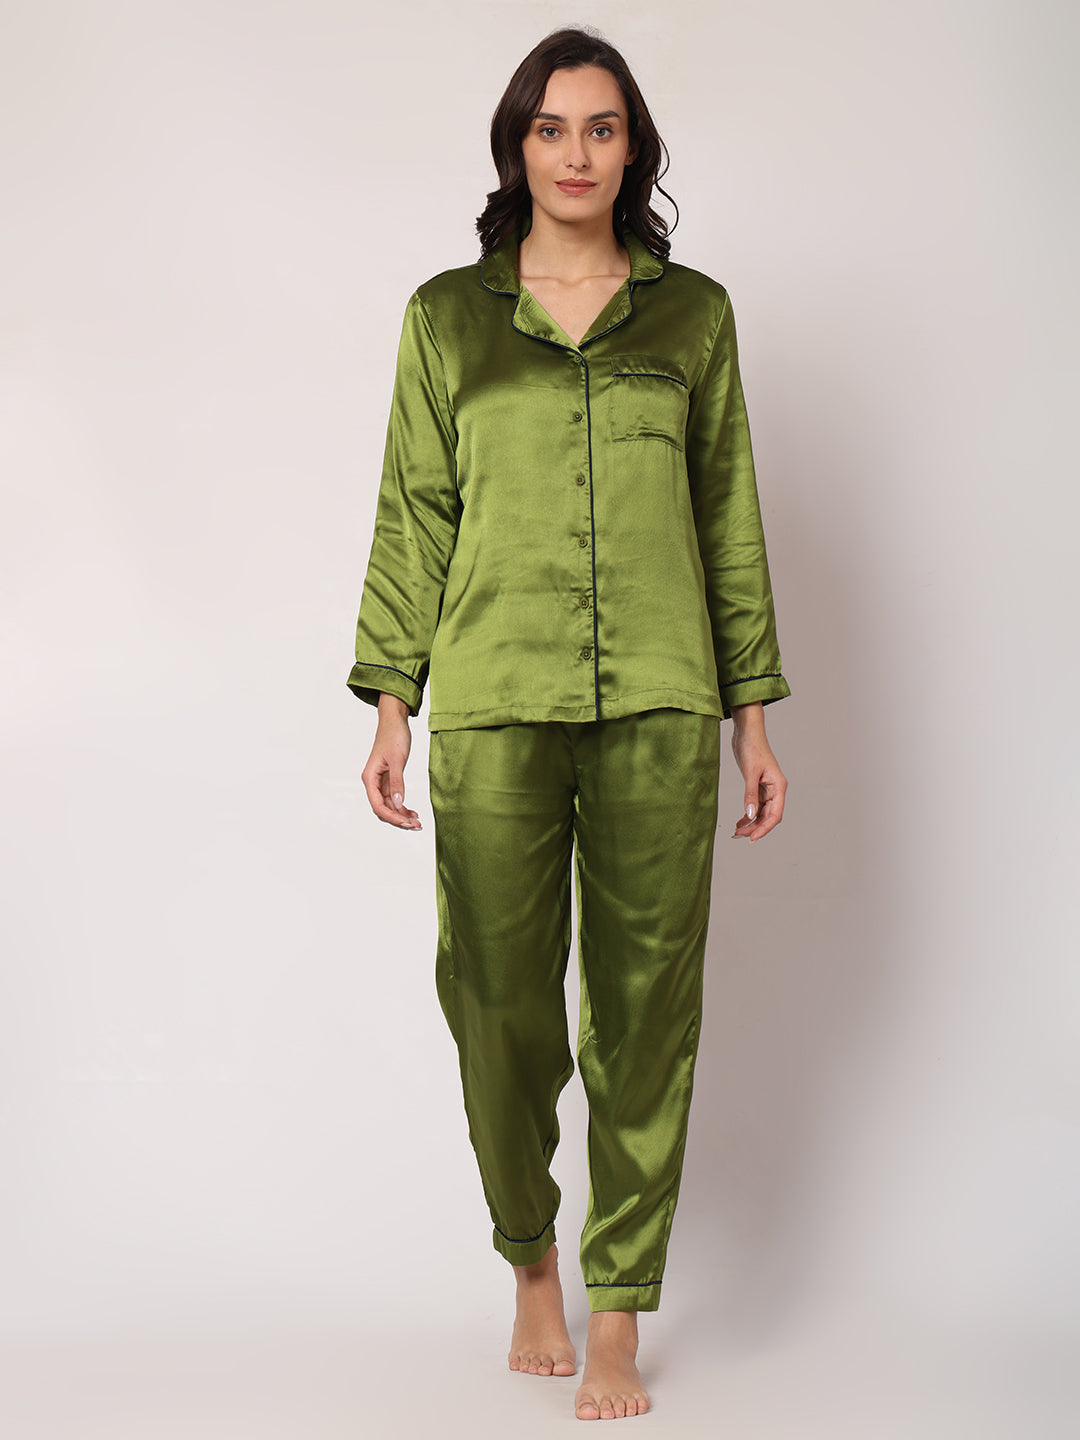 GOCHIKKO Women's Satin Plain Color Night Suit Set of Shirt & Pyjama Pack of 1(OLIVE GREEN)